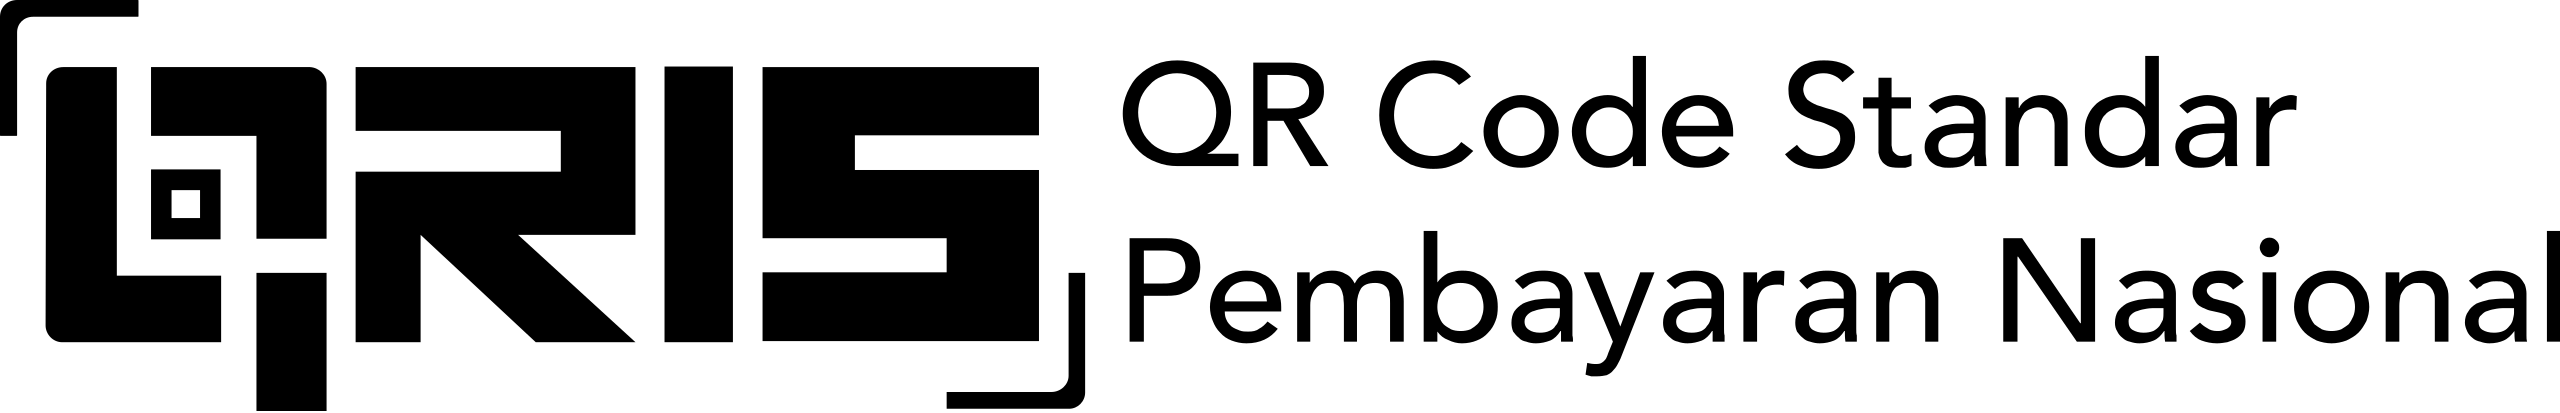 Berkas:QRIS logo.svg - Wikipedia bahasa Indonesia, ensiklopedia bebas